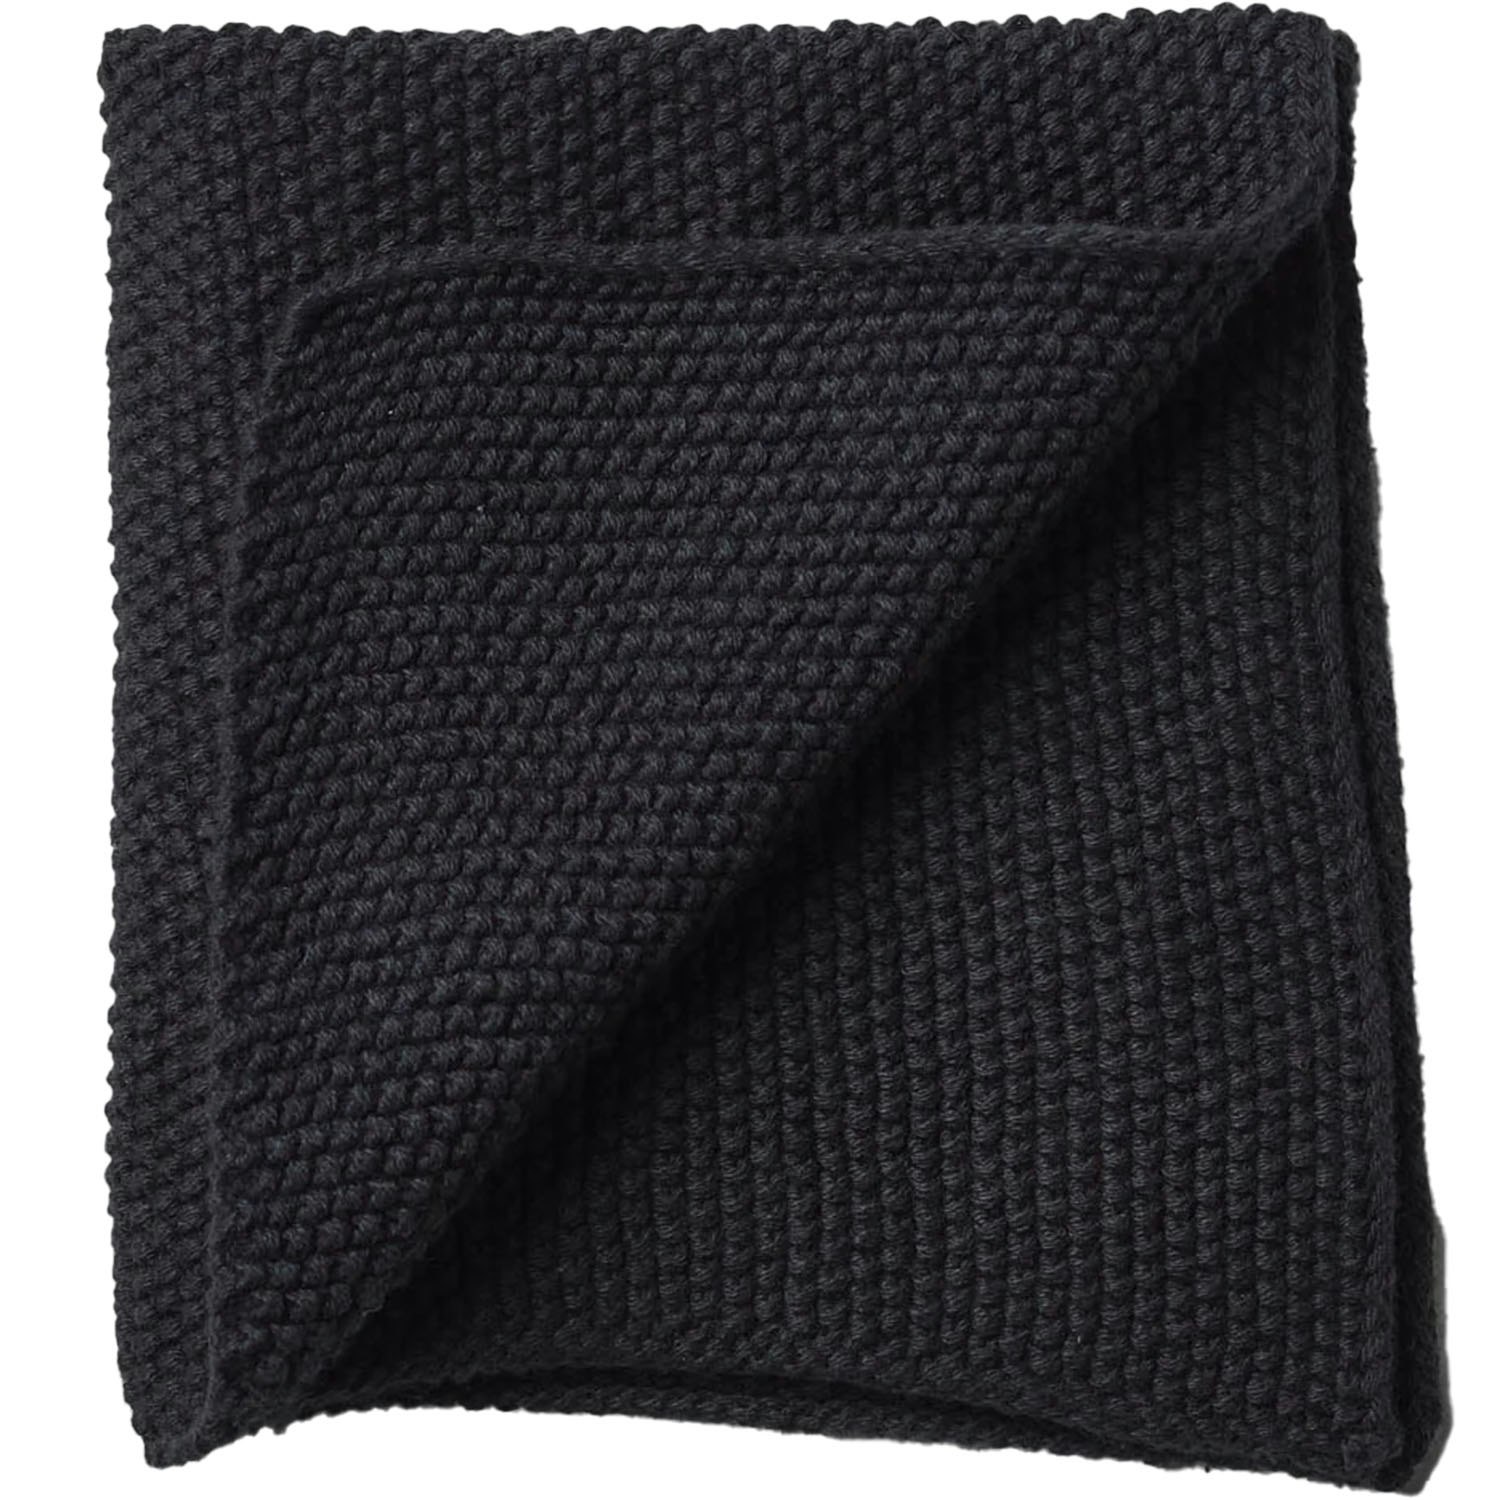 https://royaldesign.com/image/9/humdakin-knitted-dish-cloth-coal-0